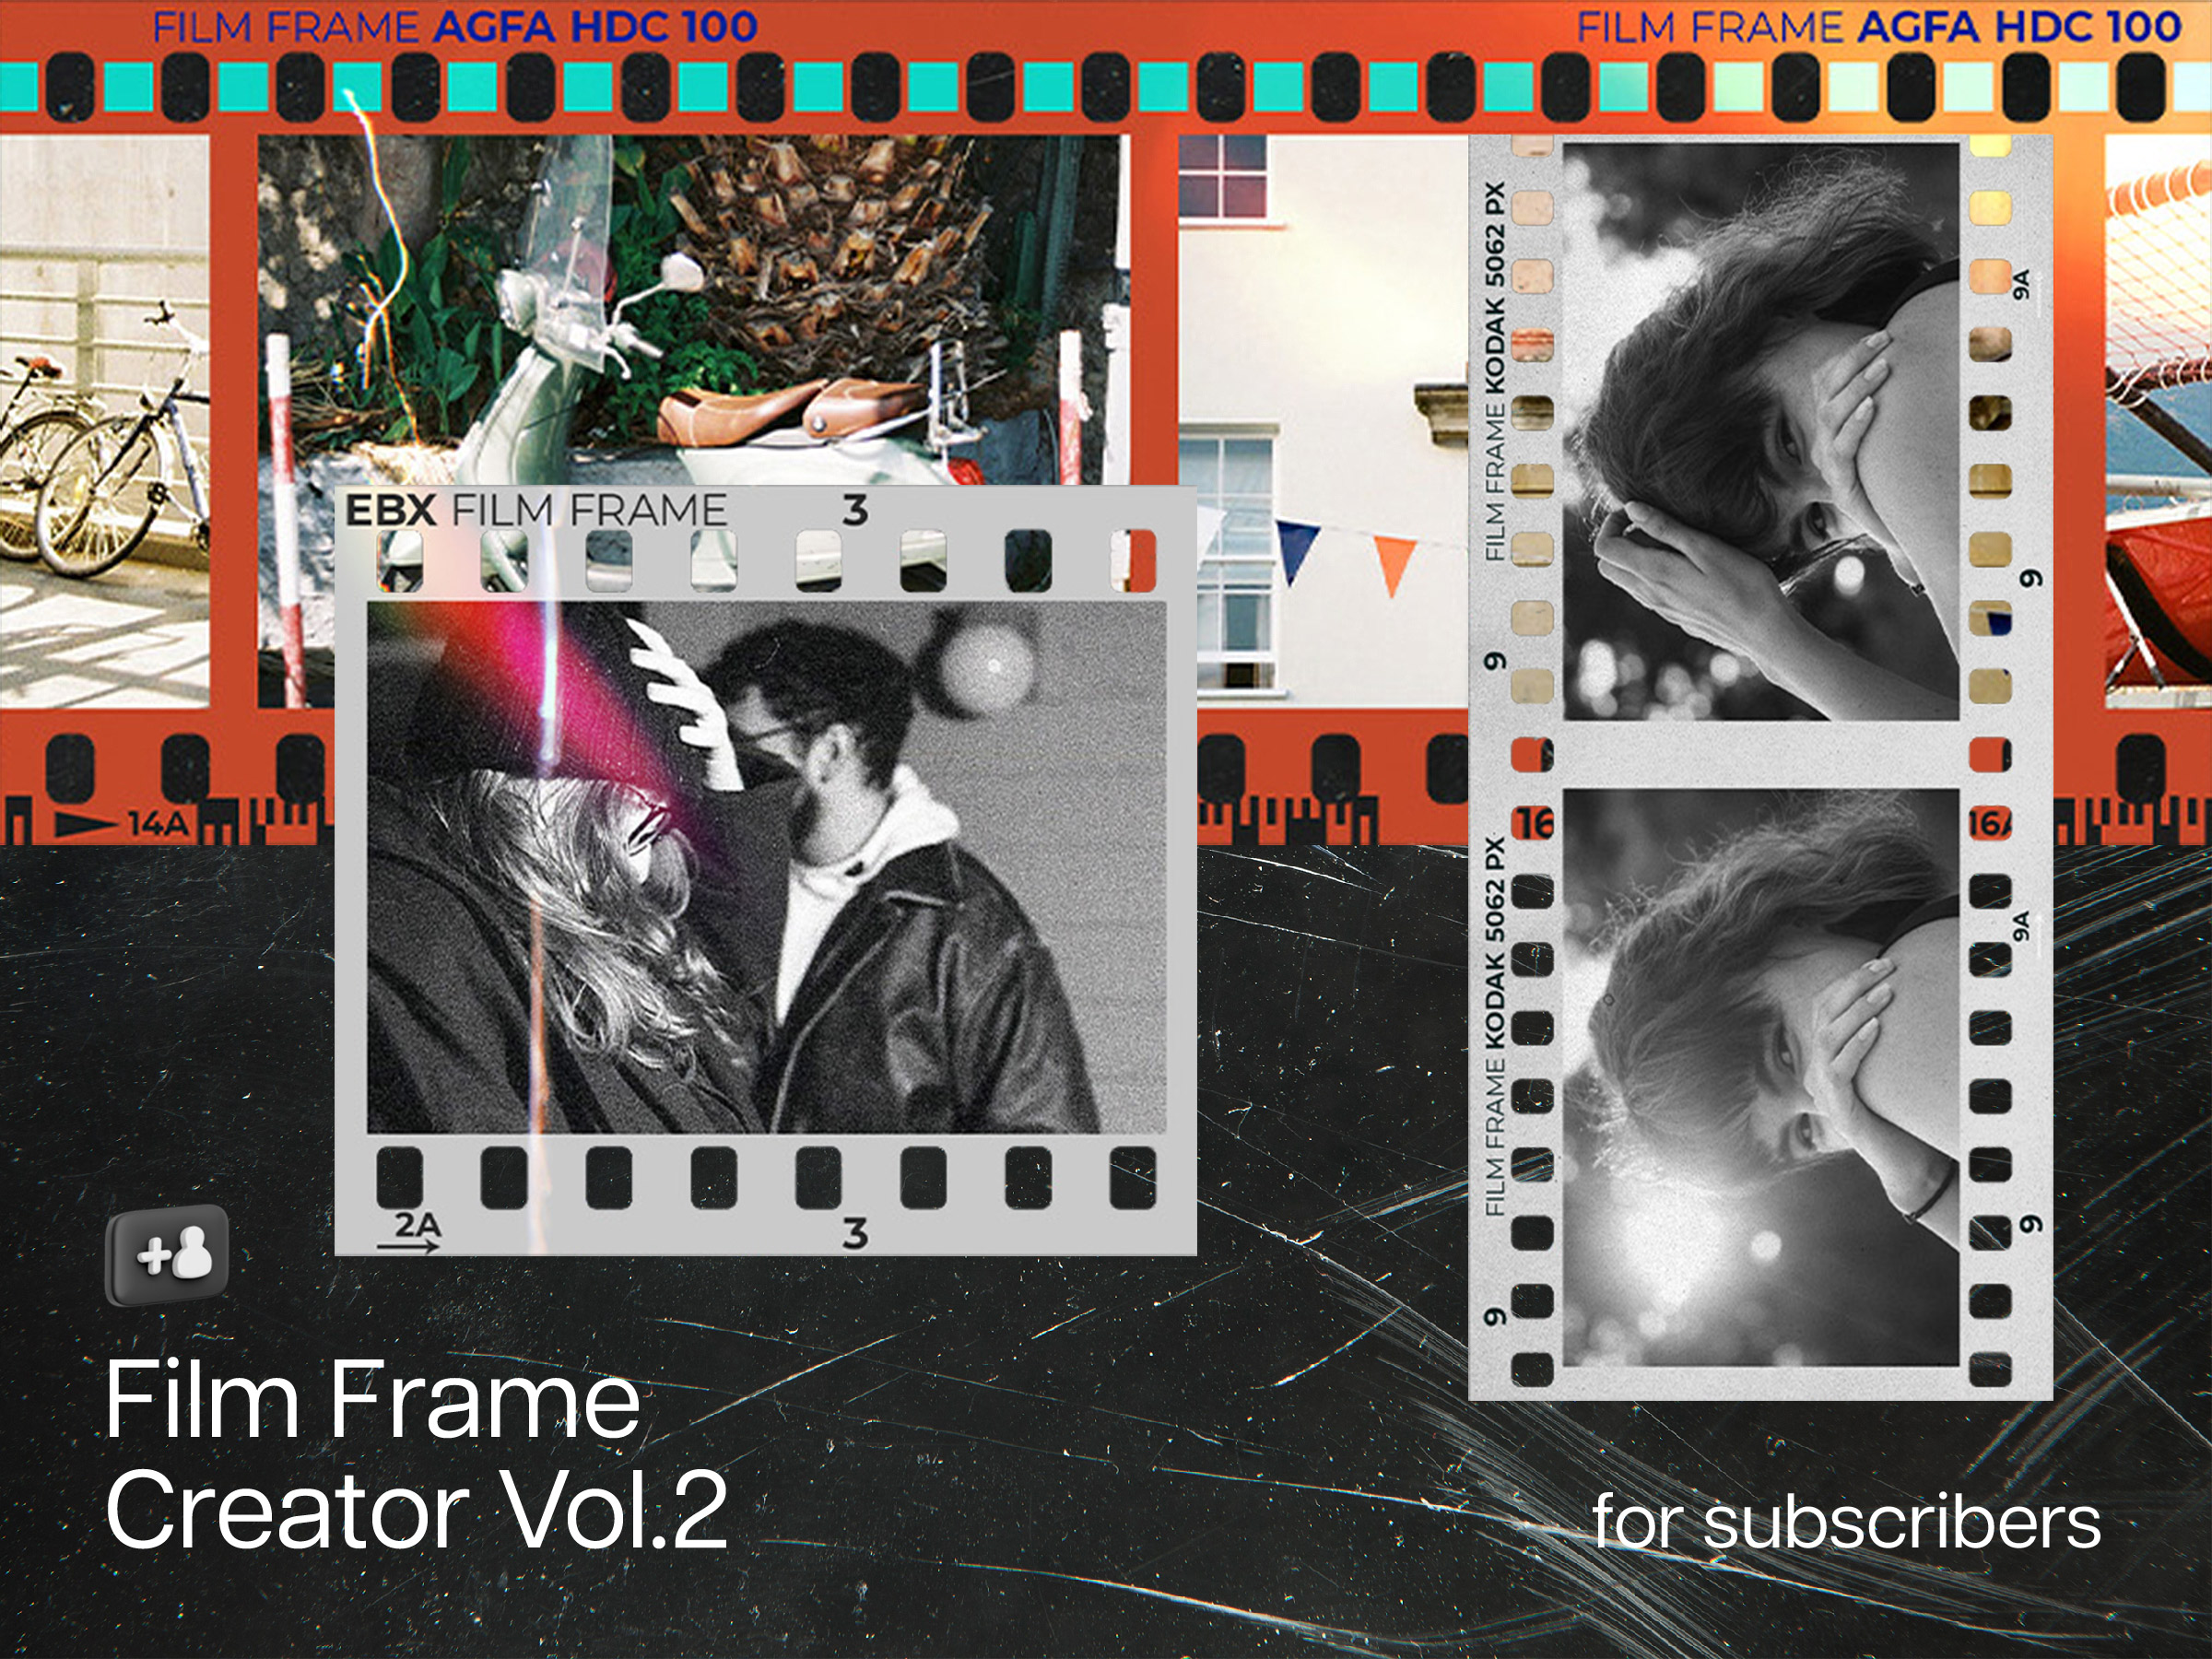 Film Frame Creator Vol.2 by Pixelbuddha on Dribbble